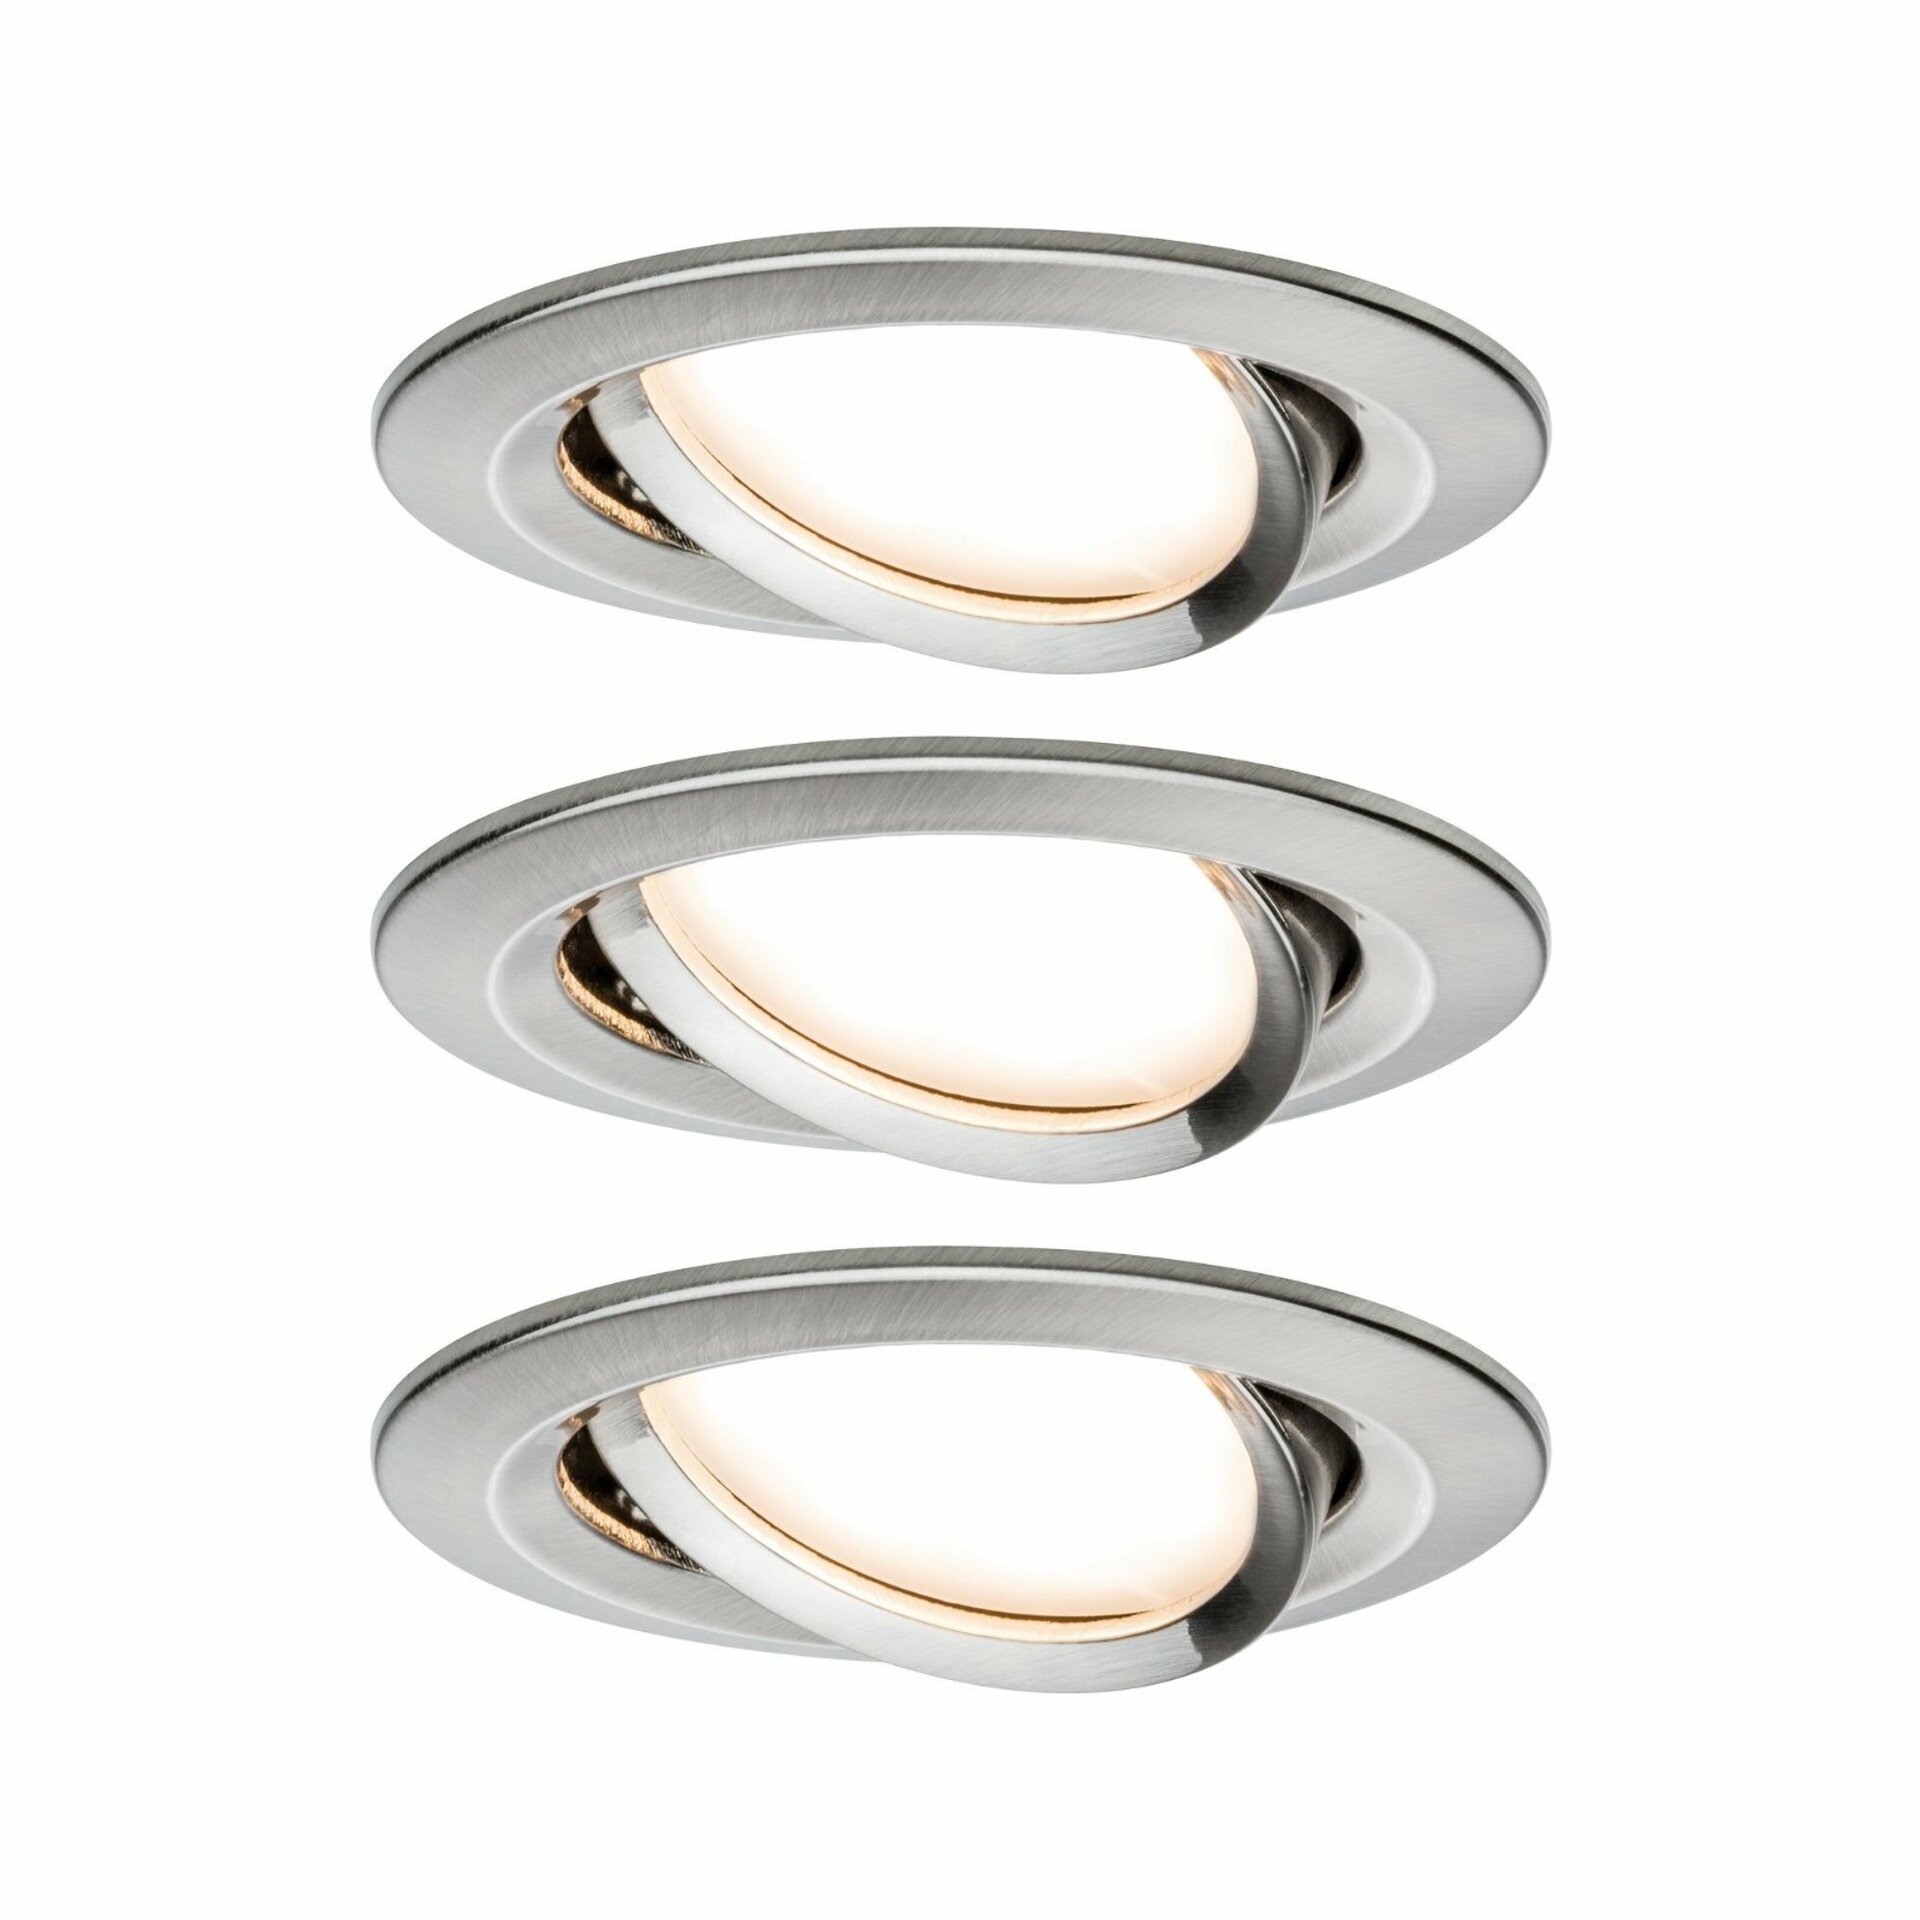 PAULMANN Vestavné svítidlo LED Nova kruhové 3x6,5W kov kartáčovaný nastavitelné 3-krokové-stmívatelné 934.83 P 93483